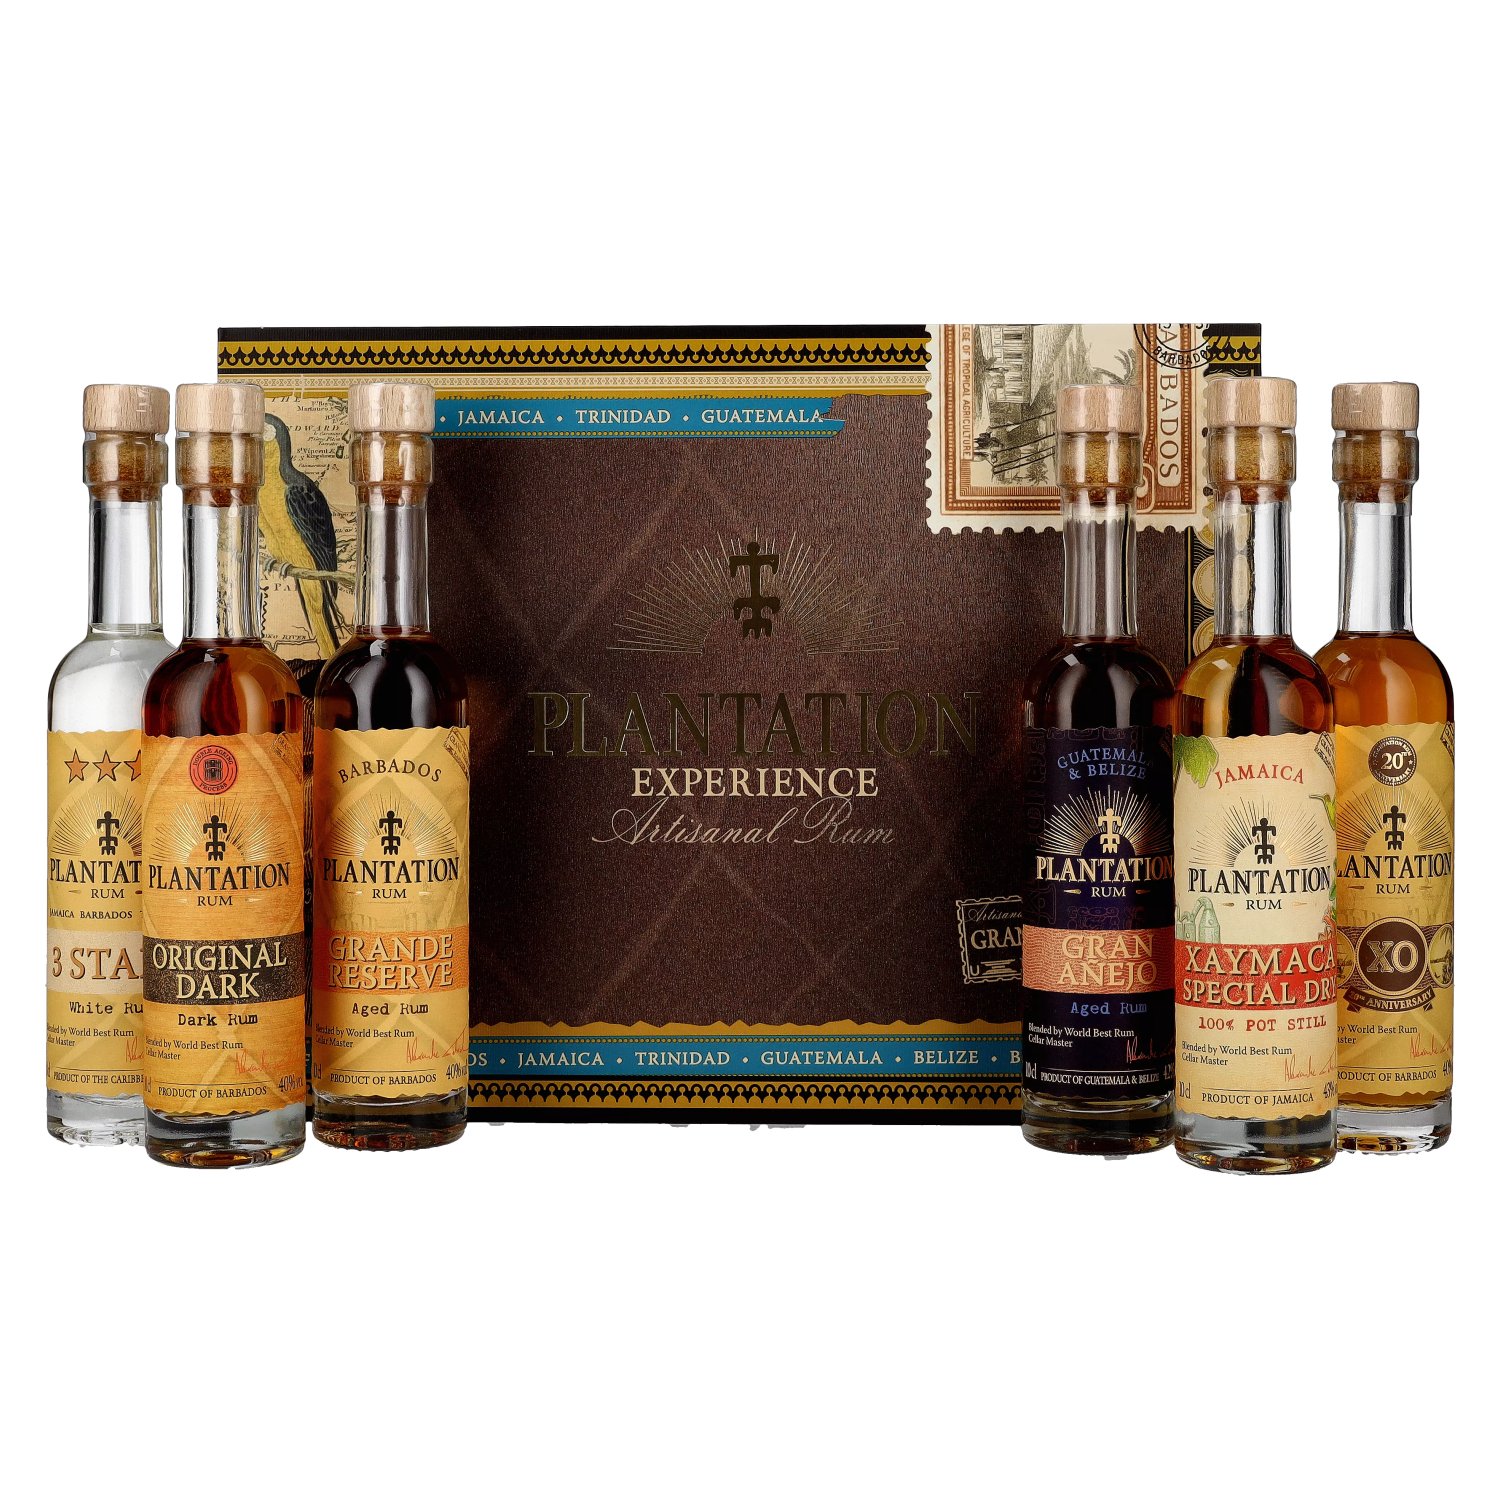 Plantation EXPERIENCE BOX Artisanal Rum 41% 6x0,1l in Vol. Giftbox